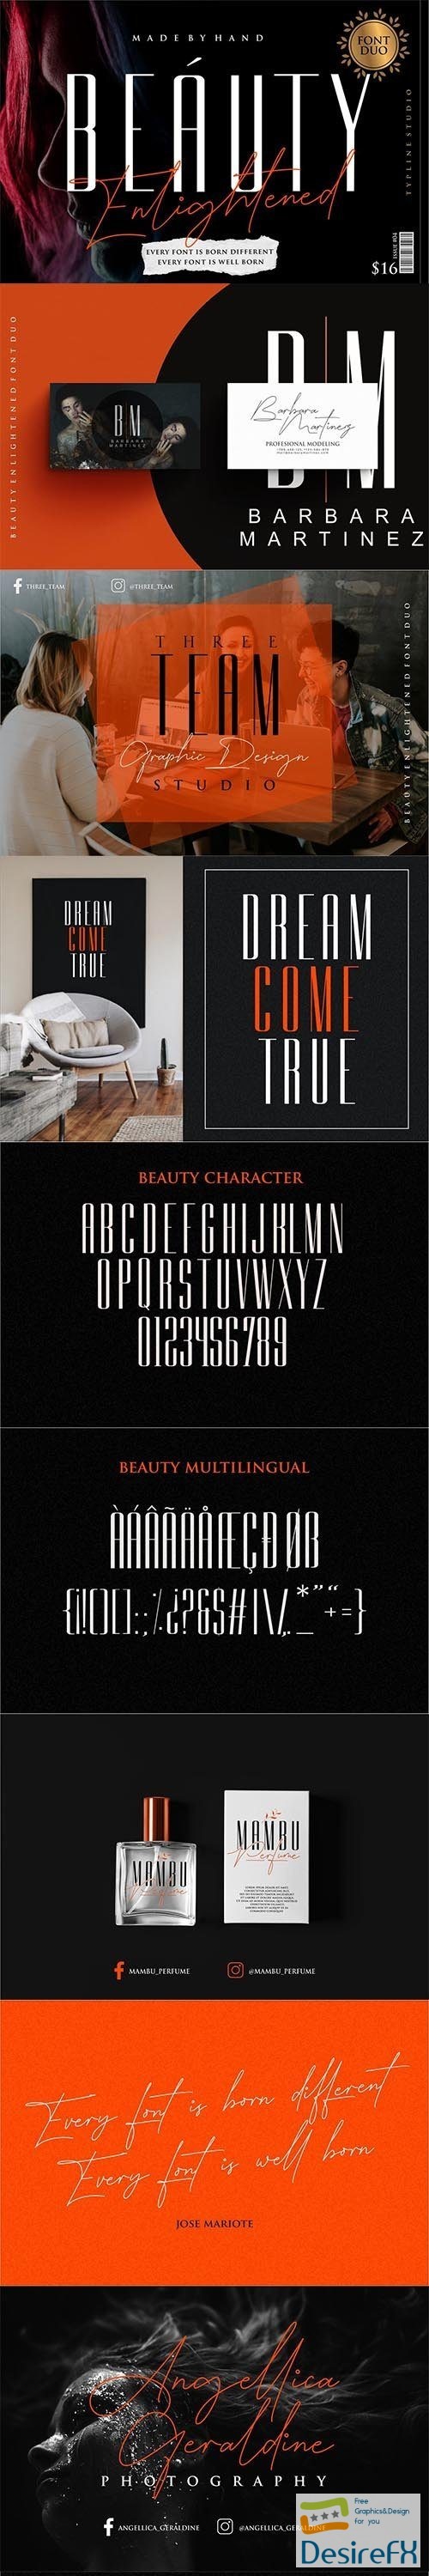 CreativeMarket - Beauty Enlightened New Duo 3611501